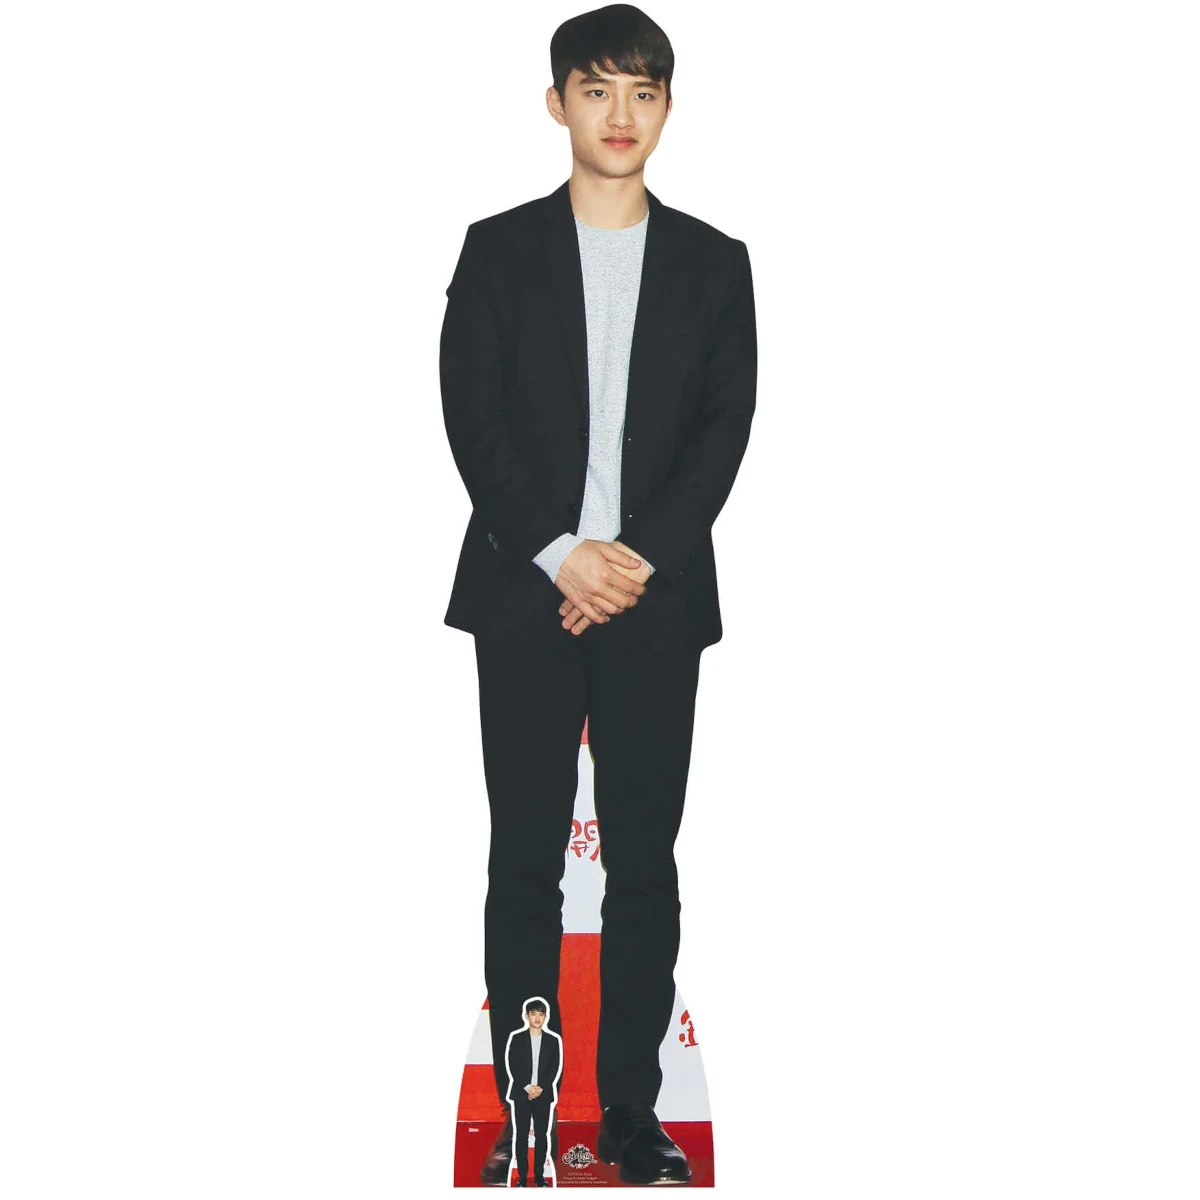 CS776 D.O. 'Exo' (South Korean Singer) Lifesize + Mini Cardboard Cutout Standee Front